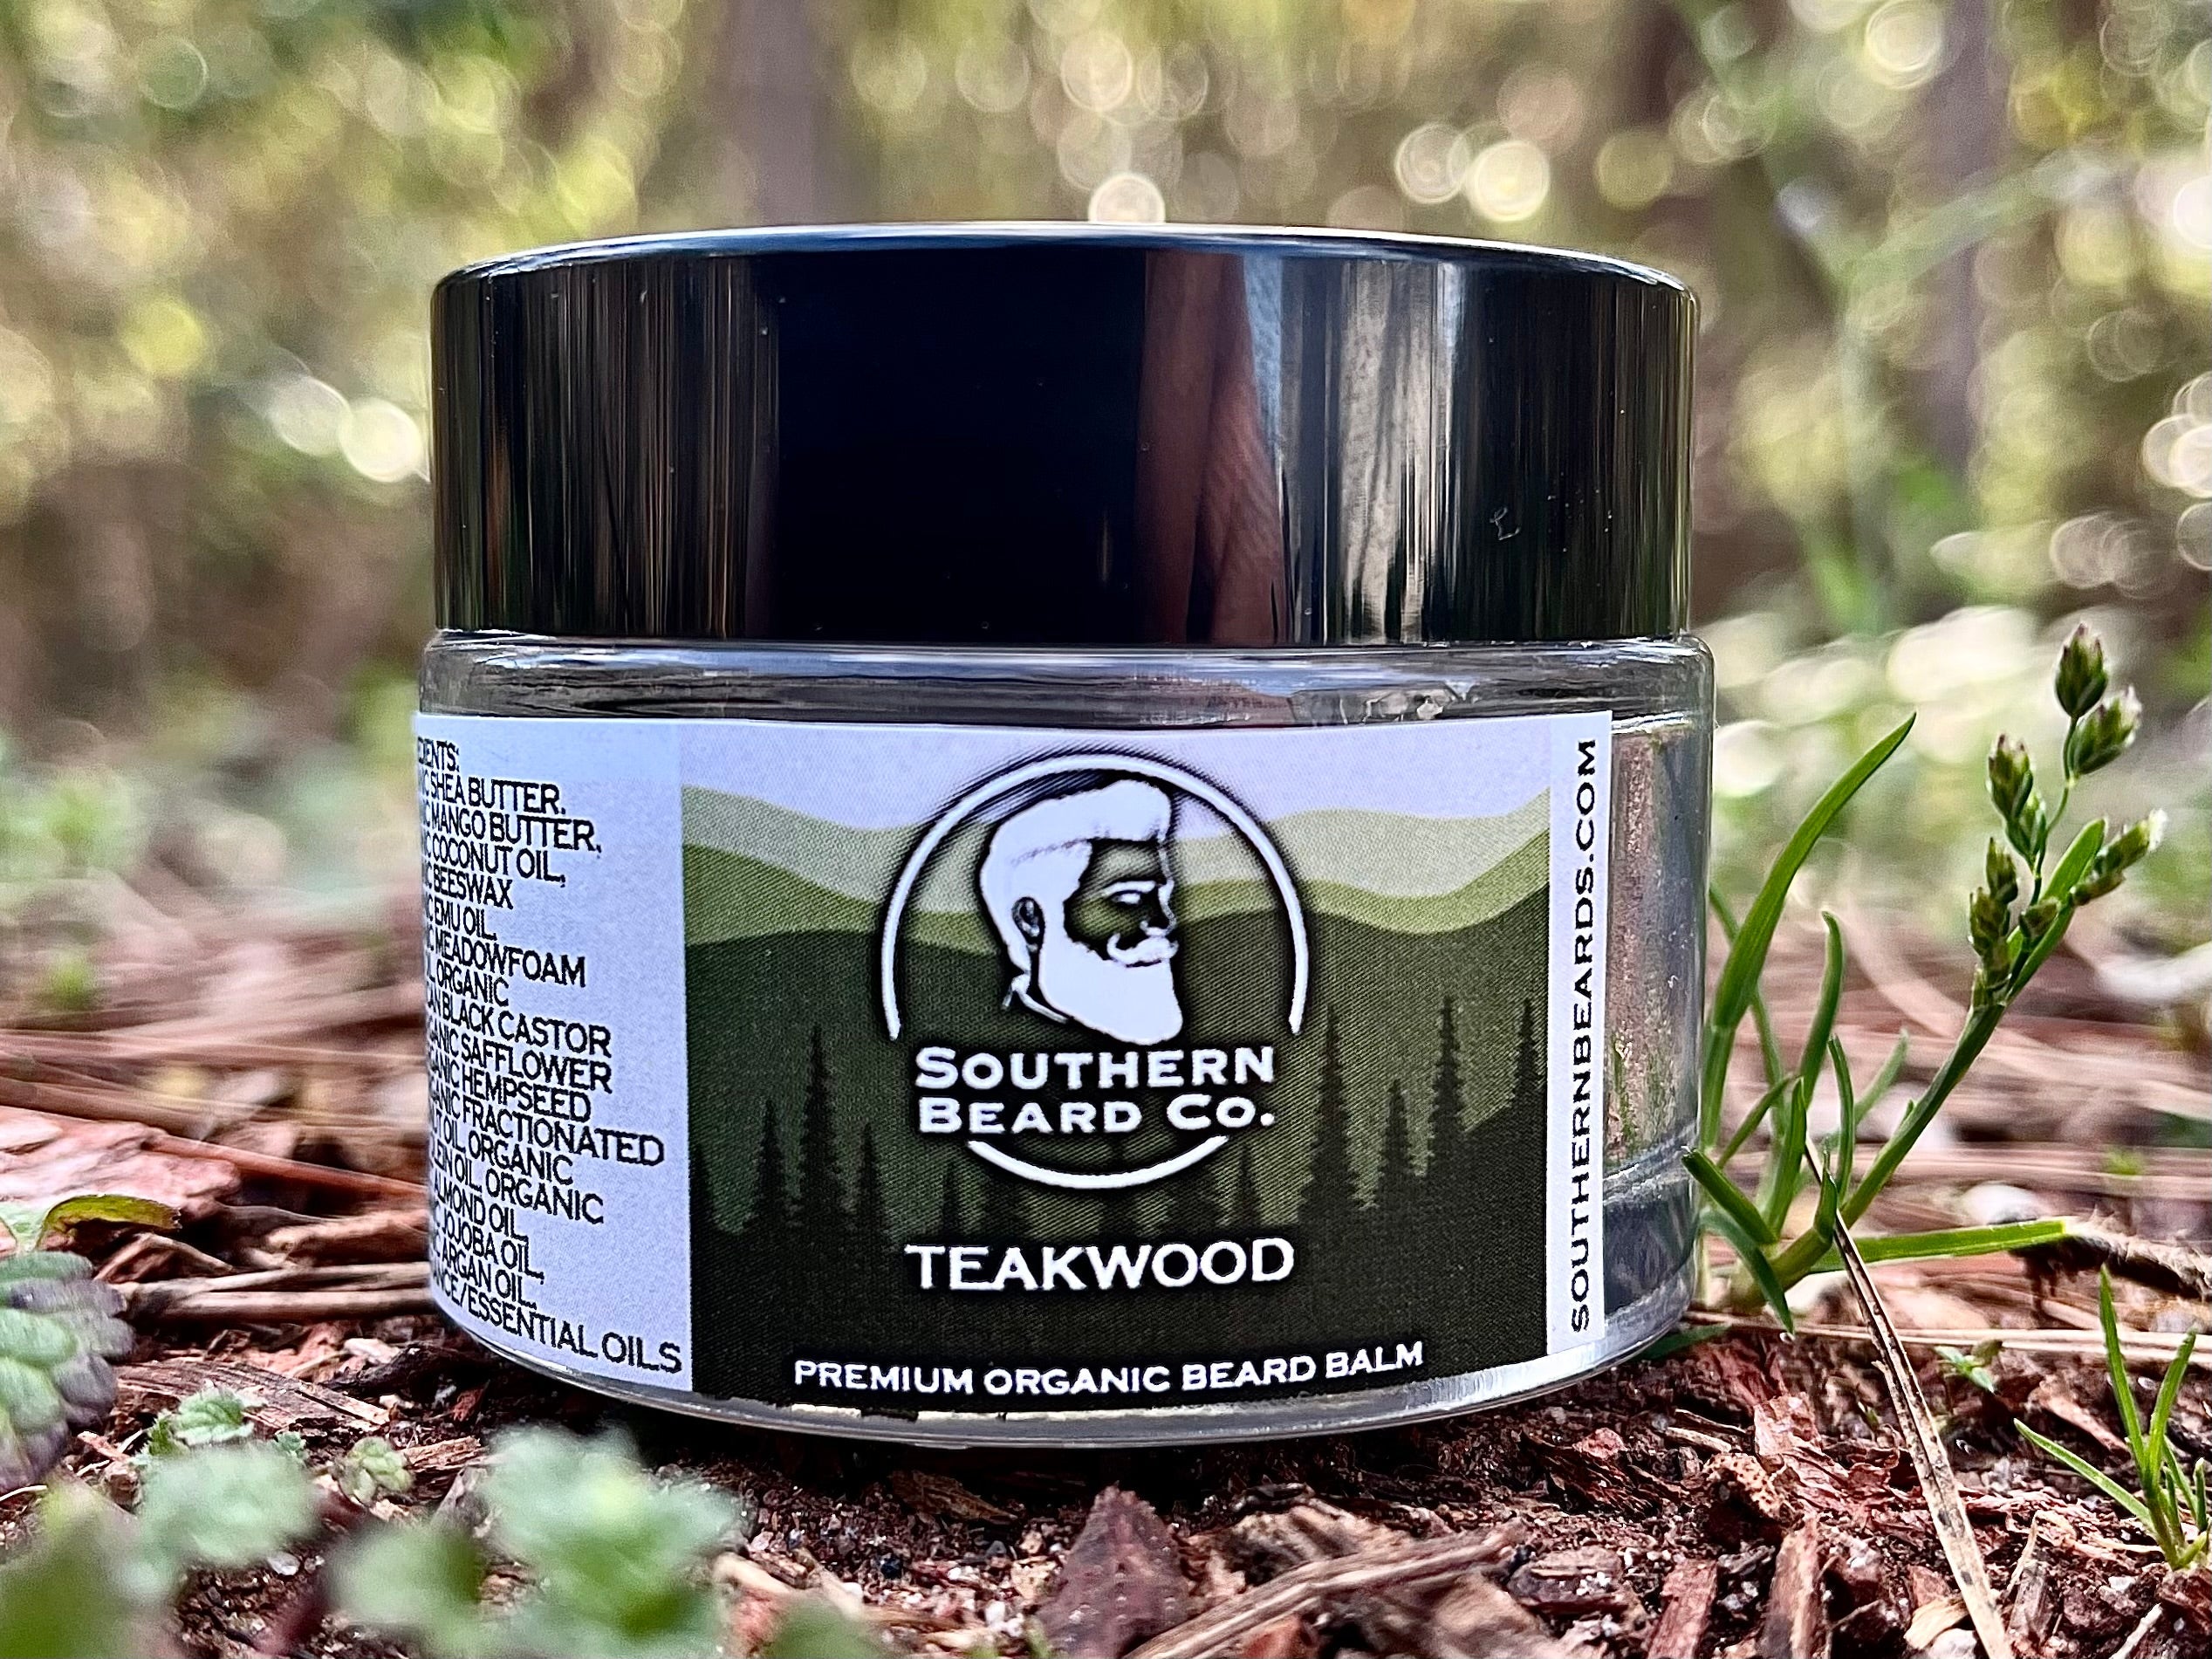 Teakwood Premium Organic Beard Balm